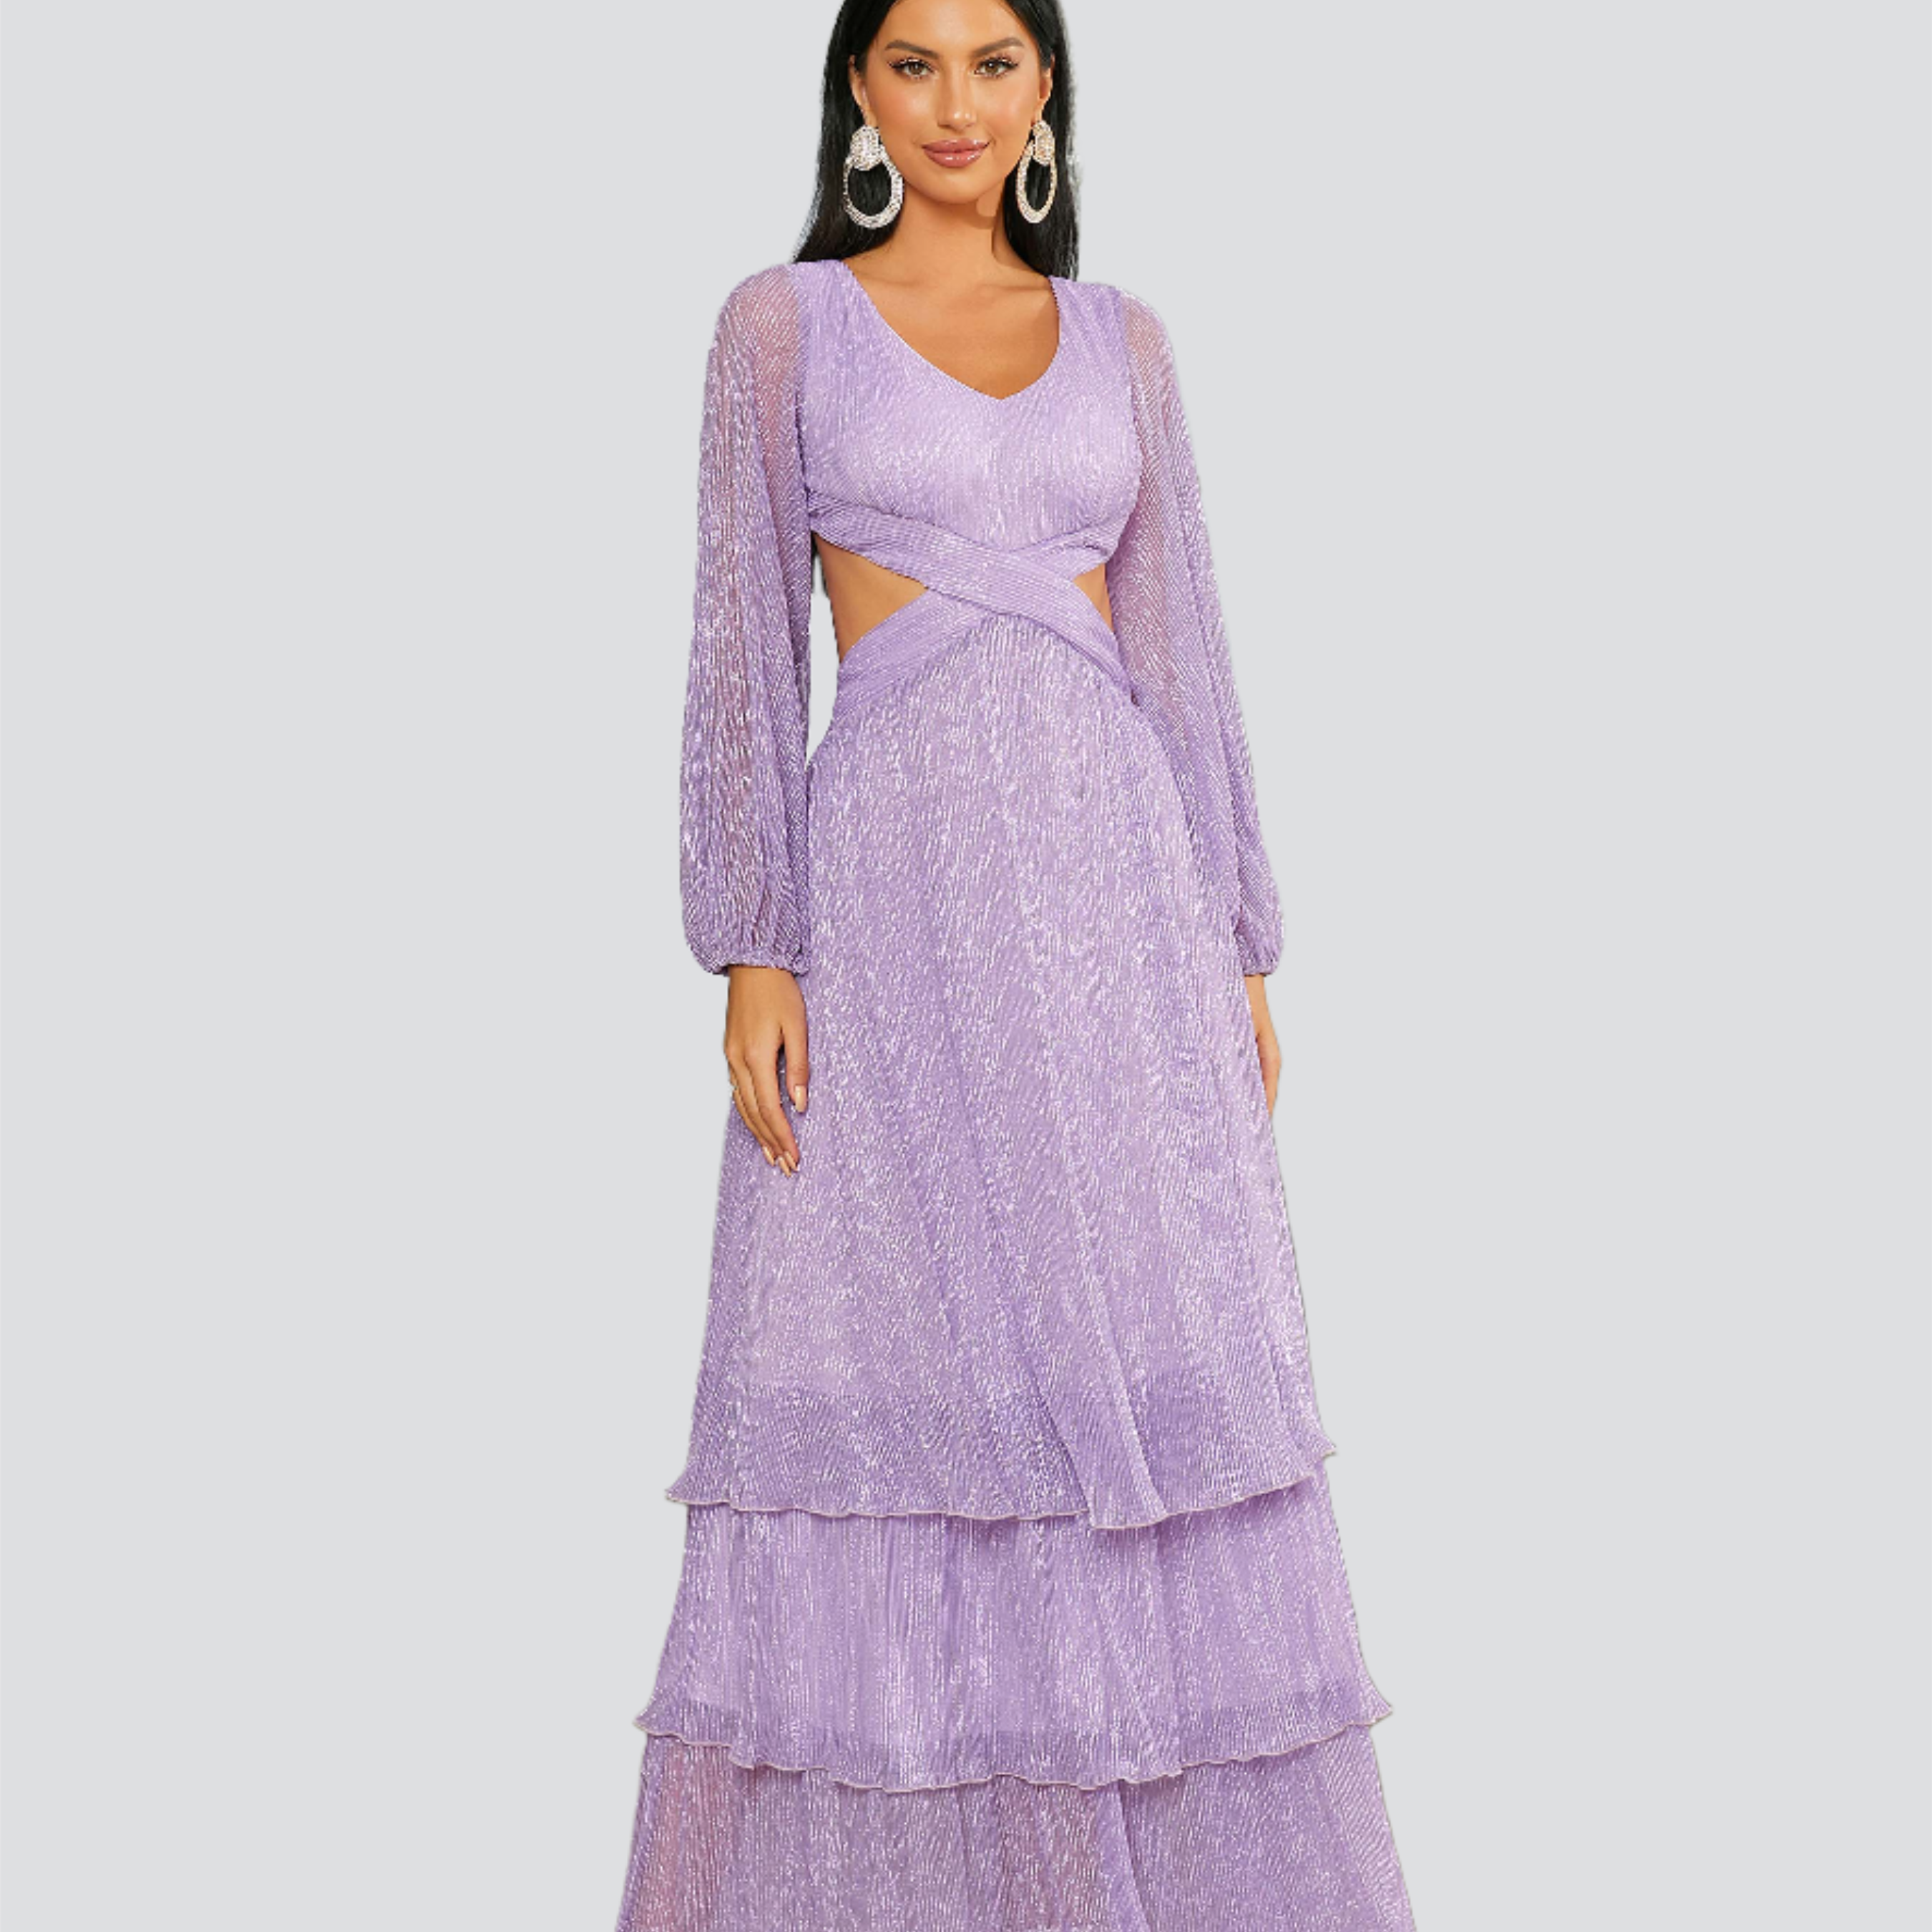 V-neck Lantern Sleeve Backless Purple Prom Dress